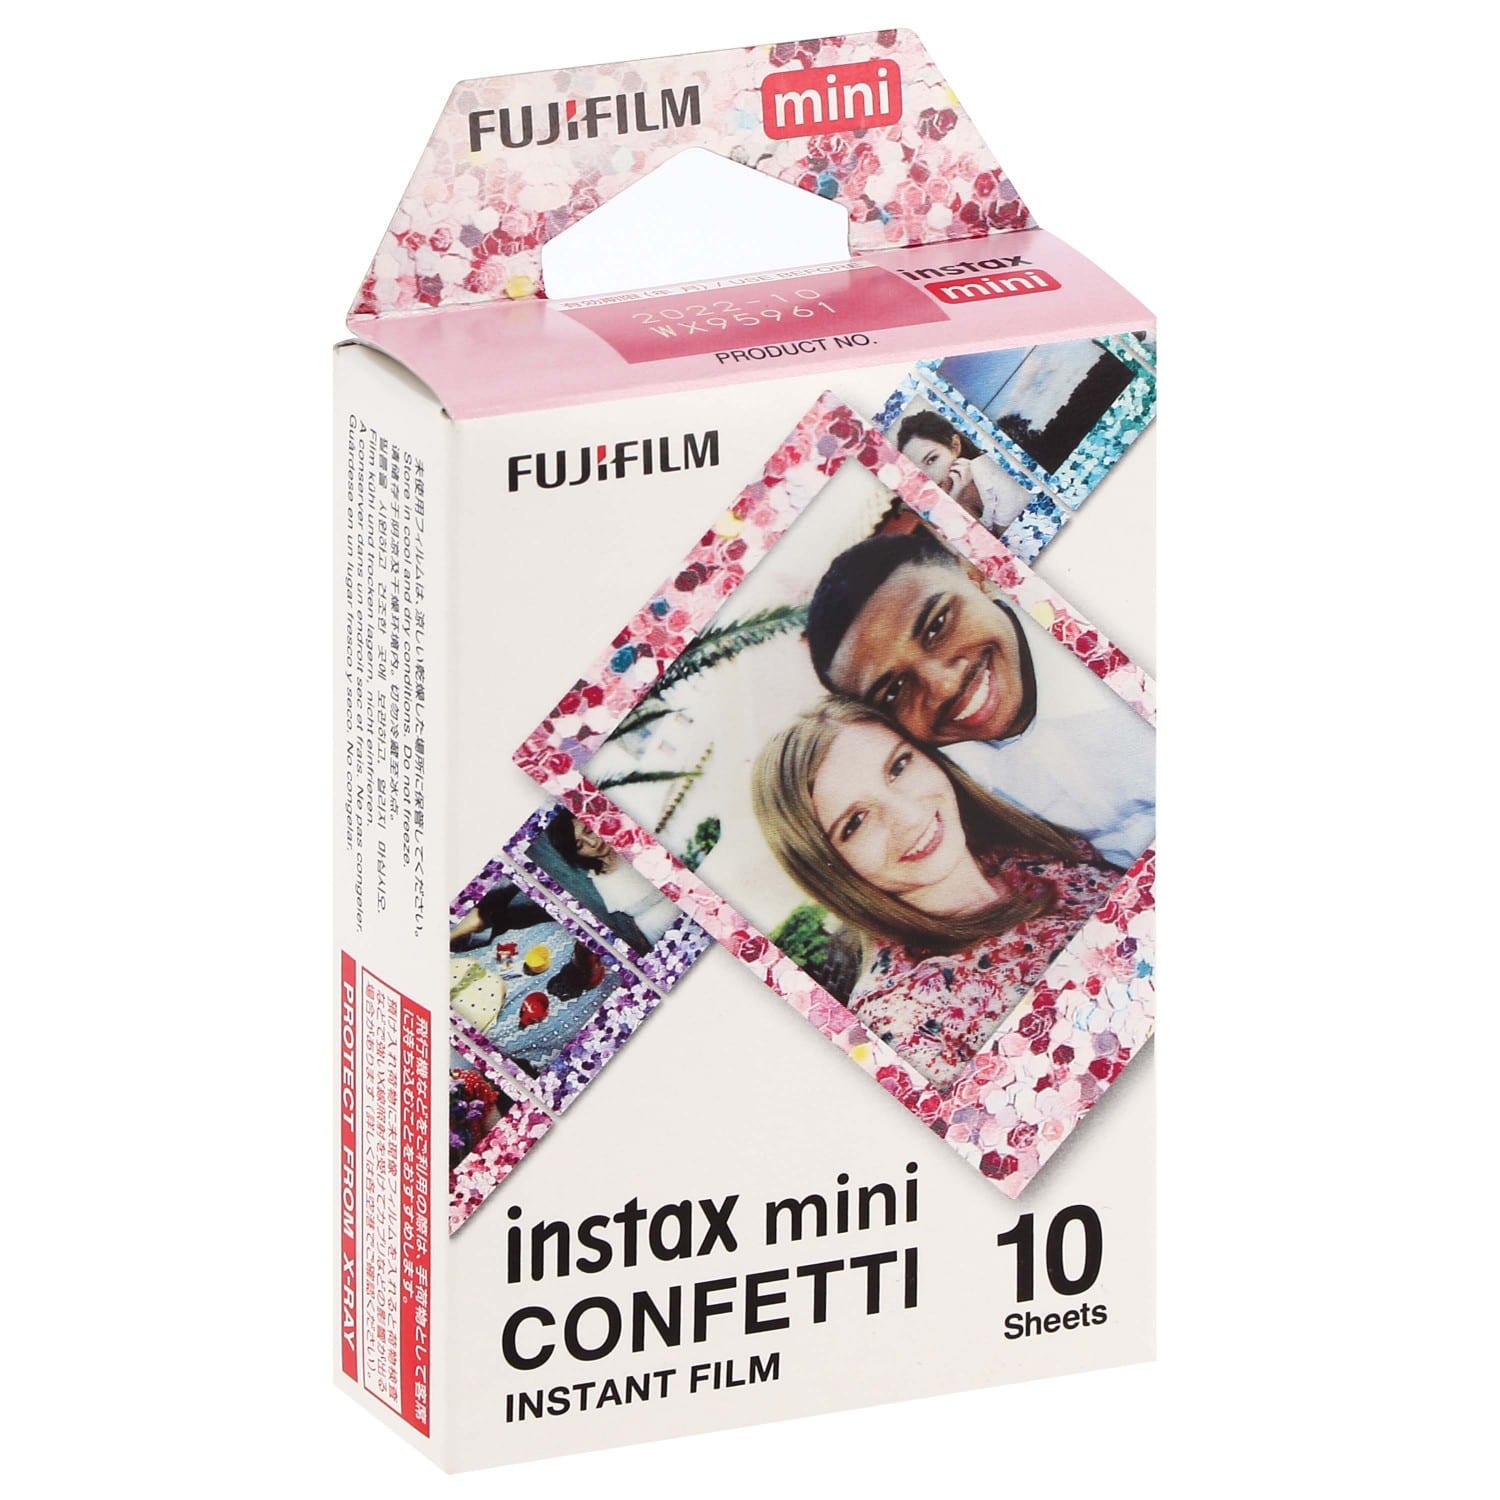 FUJIFILM film instax mini monopack de 10 vues candy pop - Pellicule